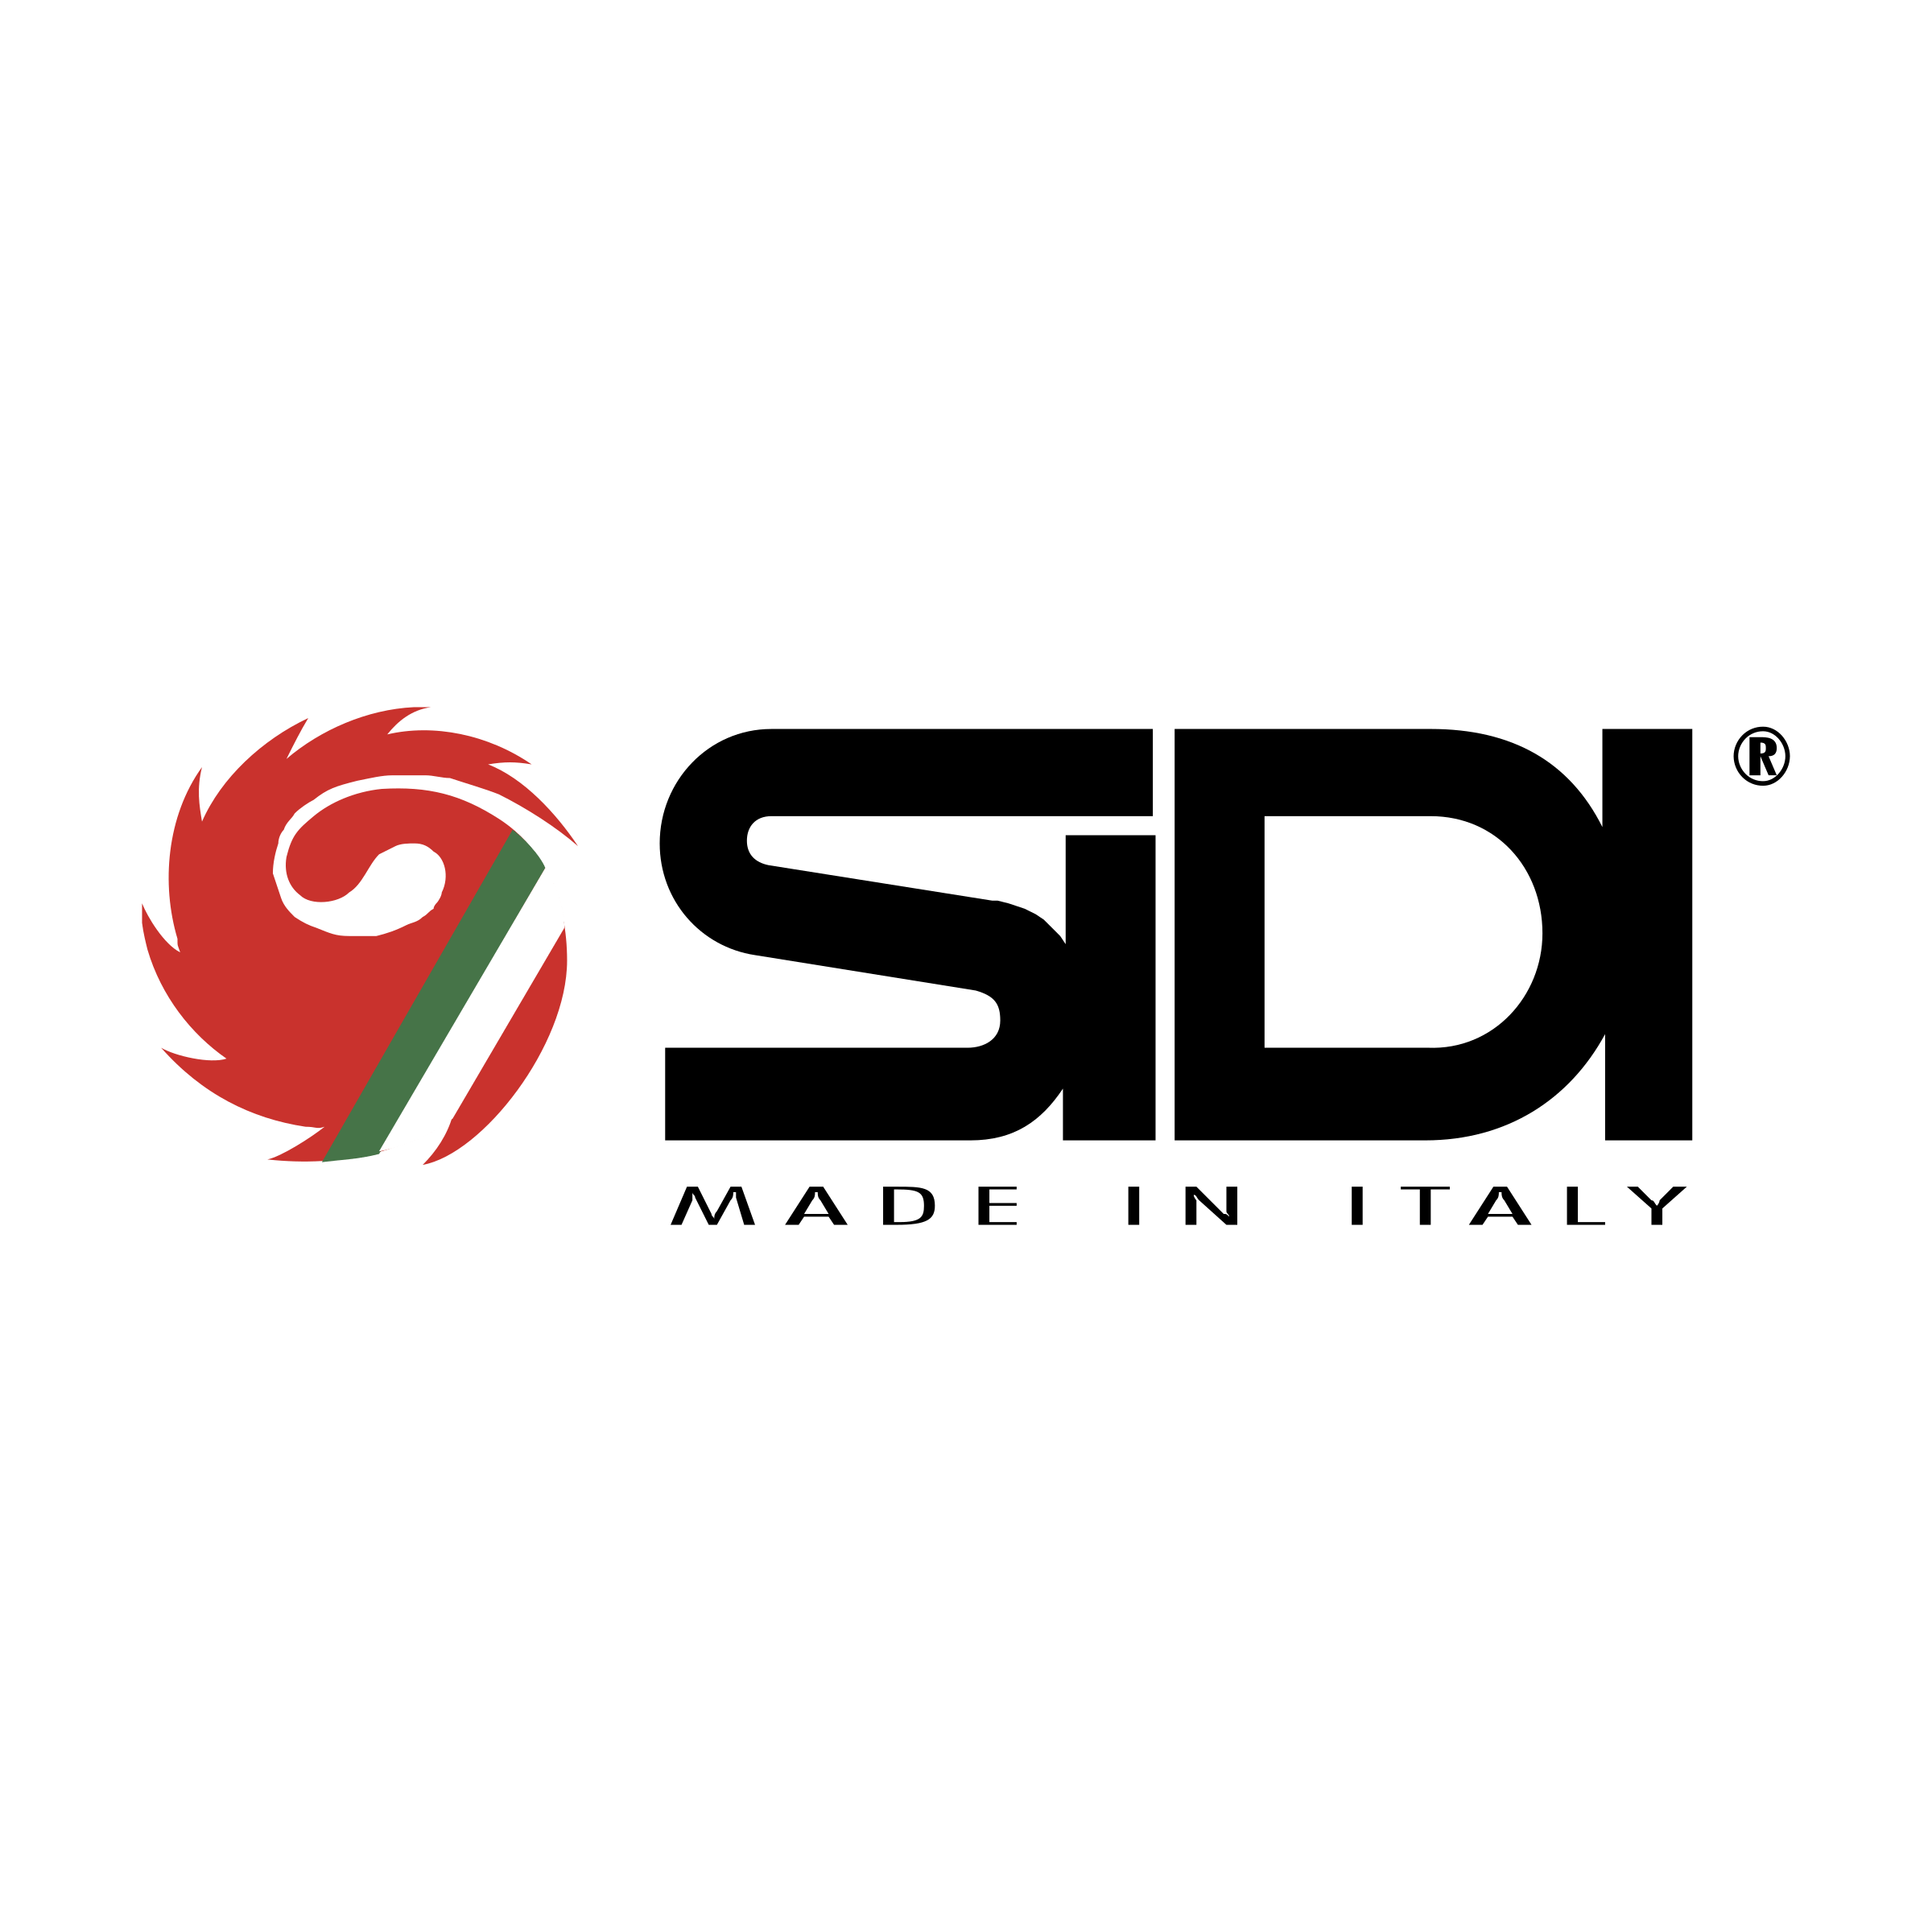 Sidi Logo - Sidi Logo PNG Transparent & SVG Vector - Freebie Supply